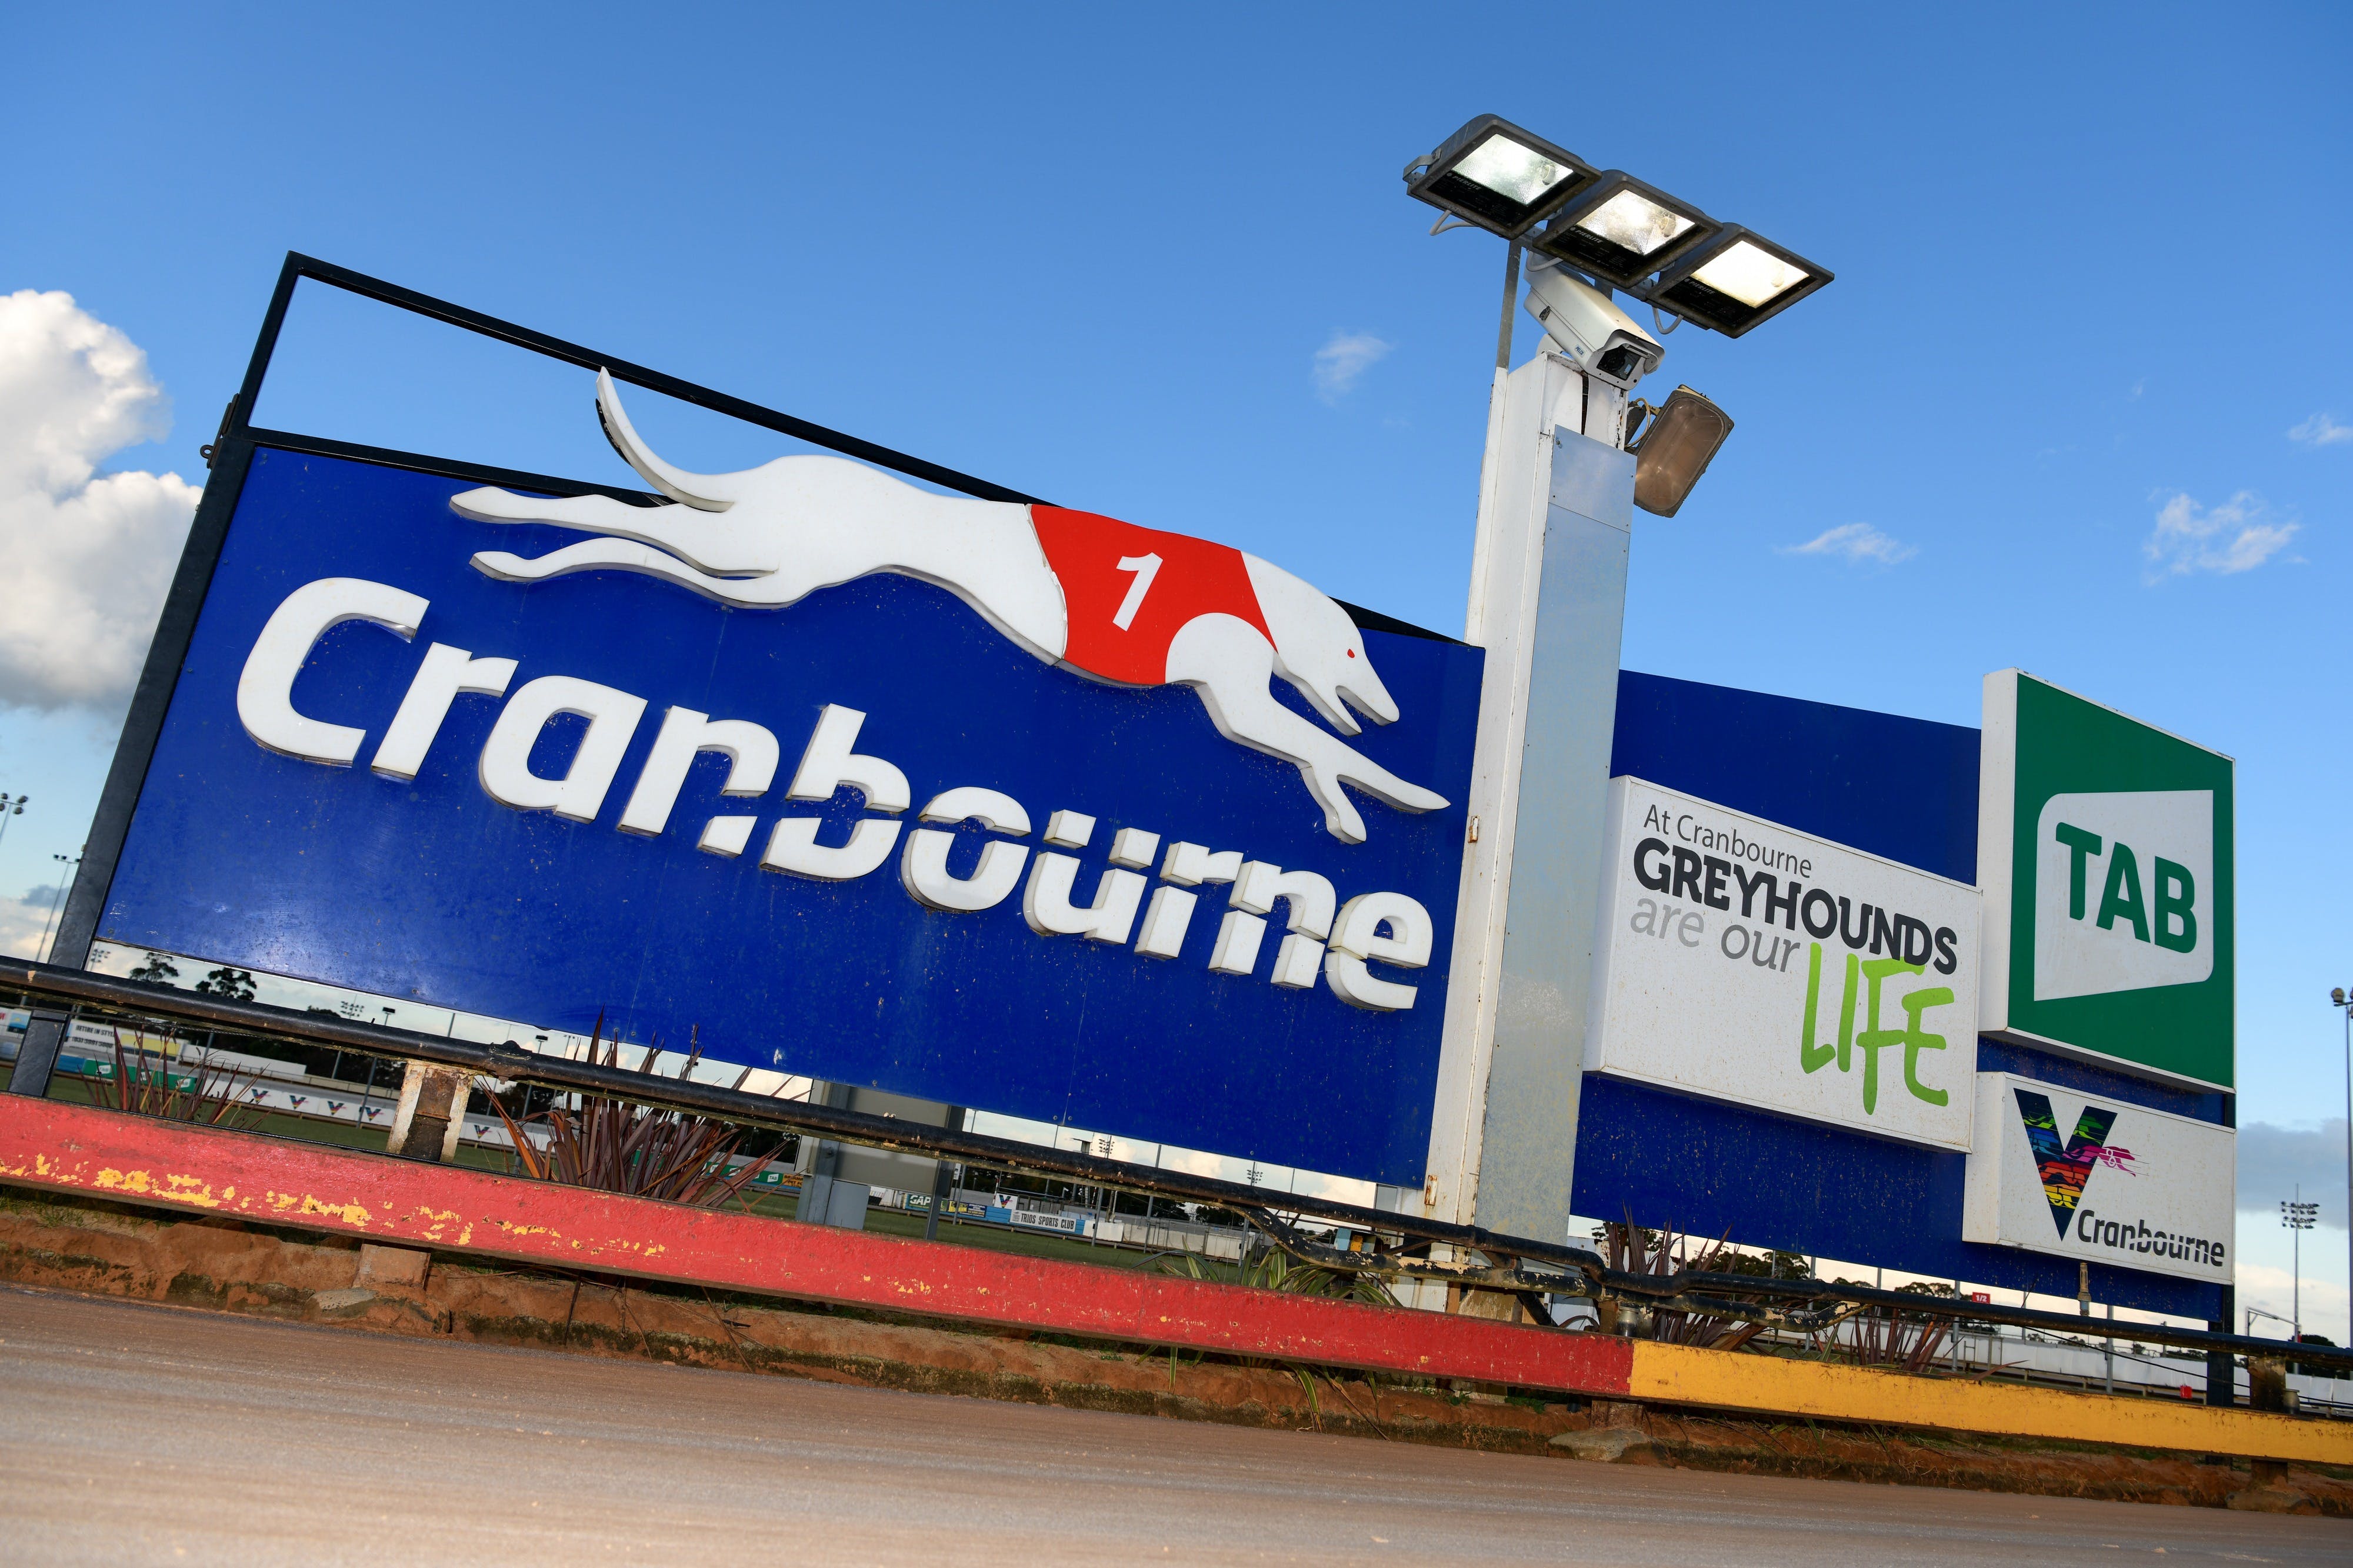 Cranbourne Greyhound Racing Club - Lightning Ridge Tourism